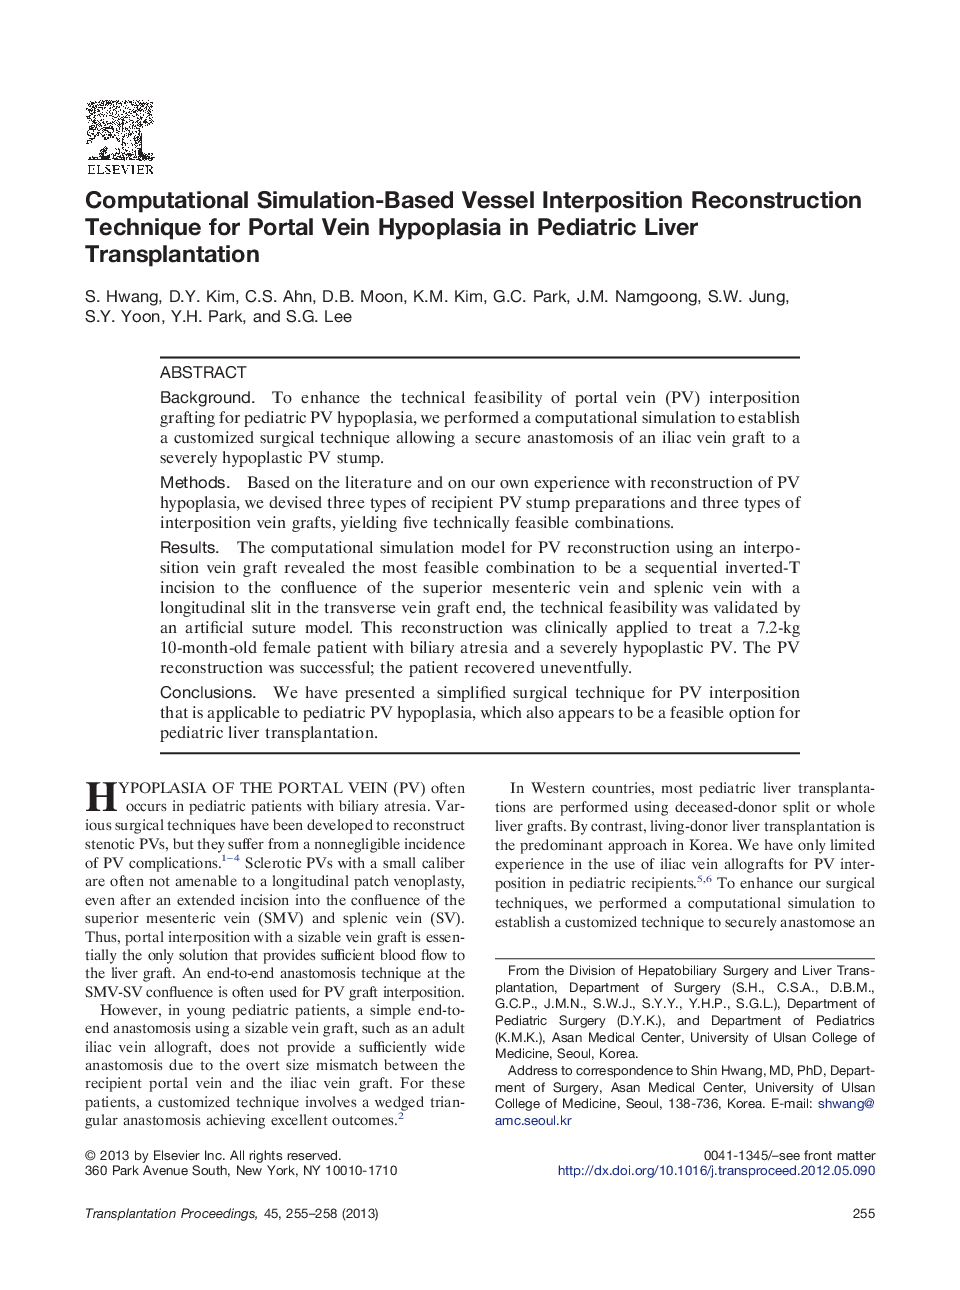 Computational Simulation-Based Vessel Interposition Reconstruction Technique for Portal Vein Hypoplasia in Pediatric Liver Transplantation